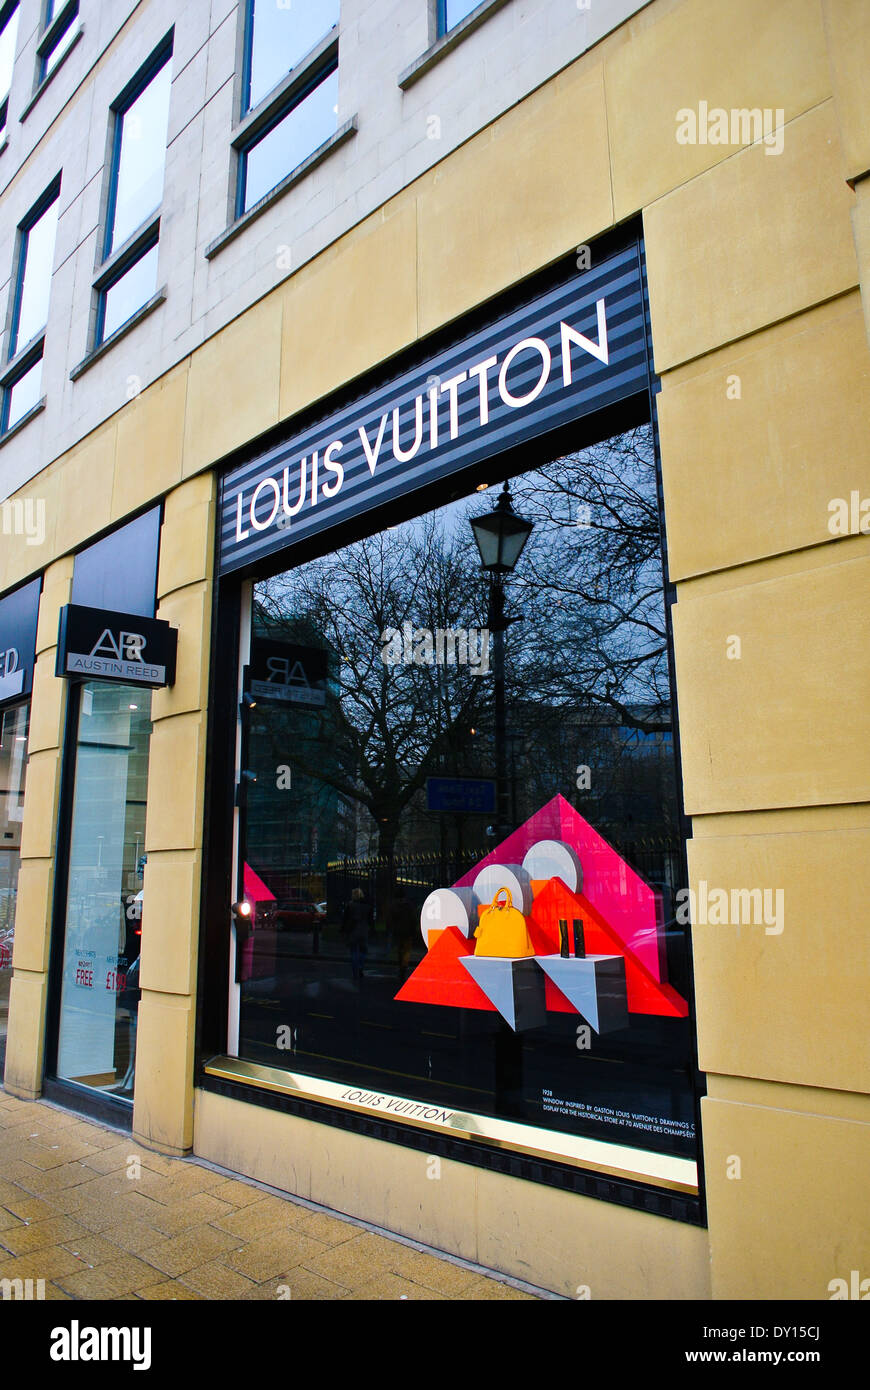 Louis Vuitton Store Sign Stock Photo - Download Image Now - Louis Vuitton -  Designer Label, Logo, Store - iStock